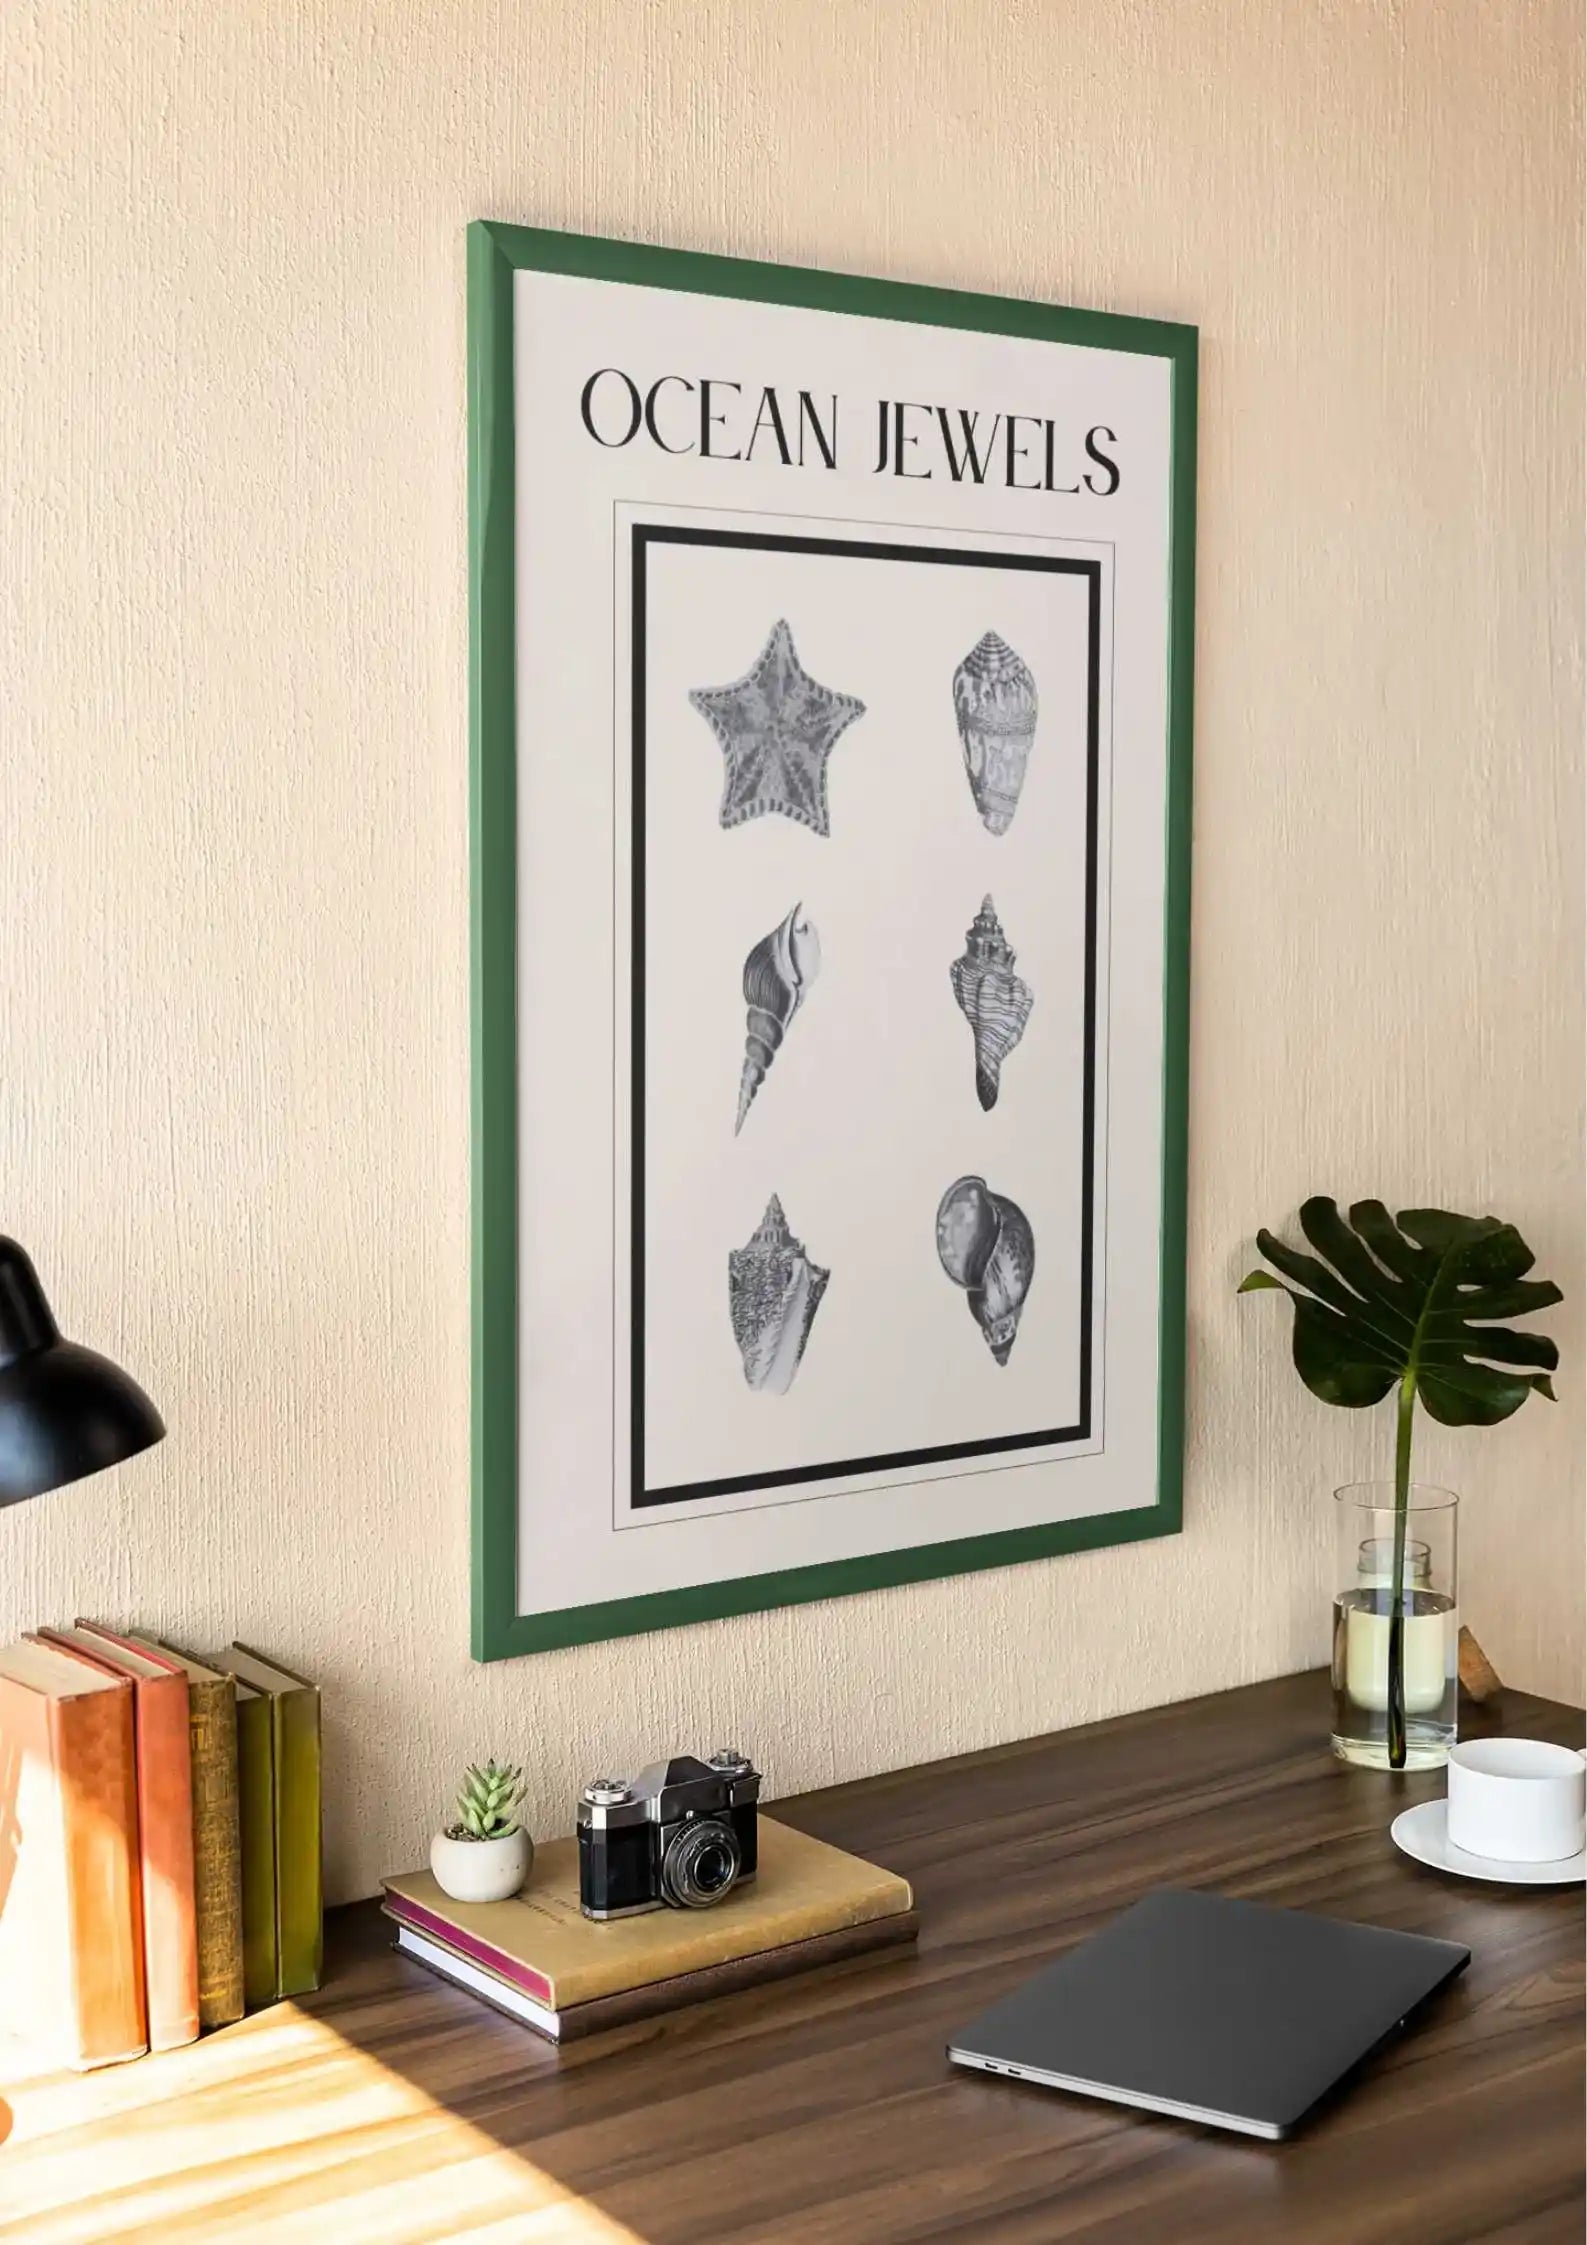 poster ocean jewels